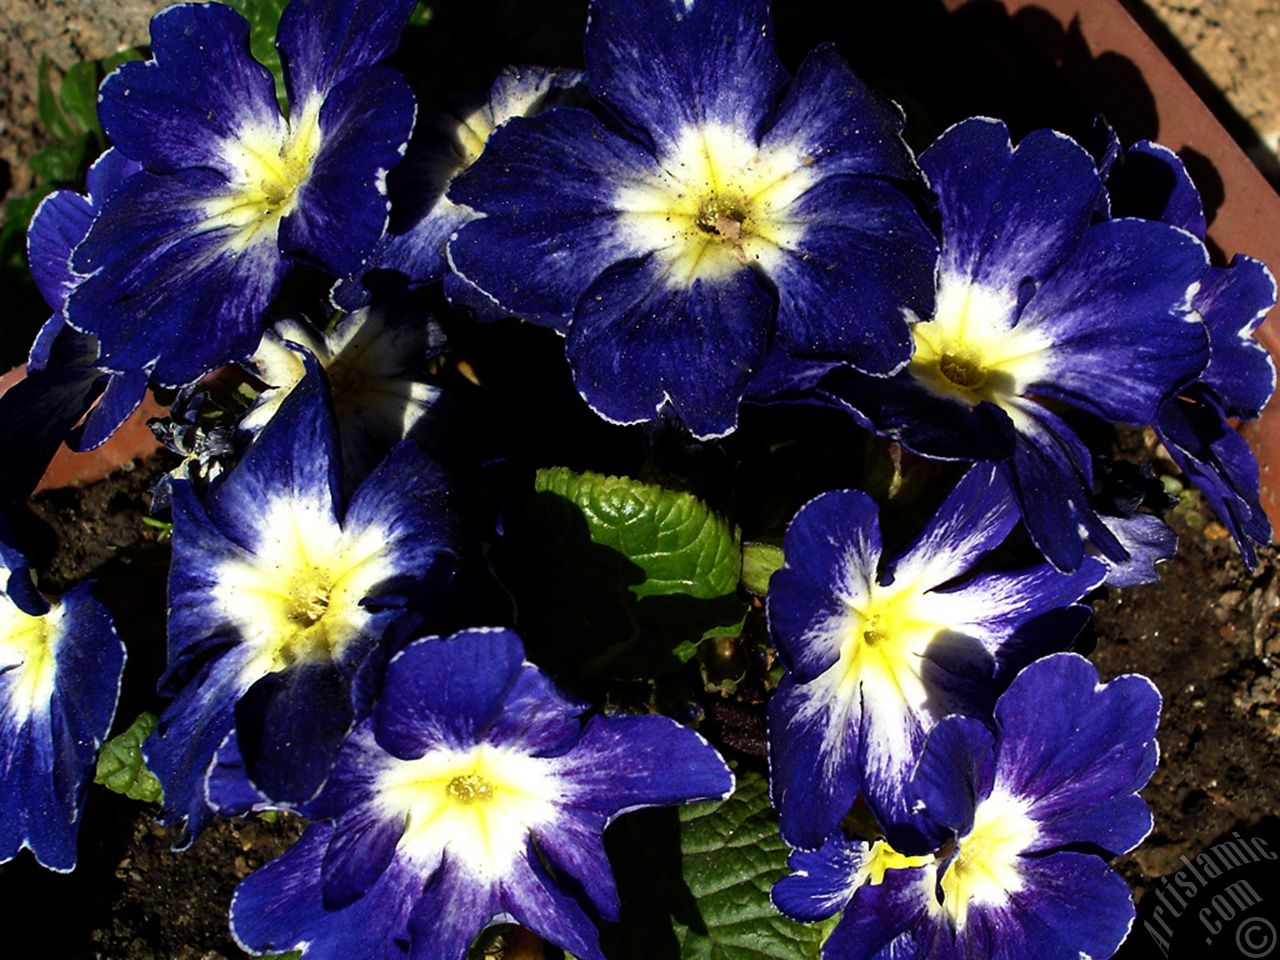 A primrose flower photo.
